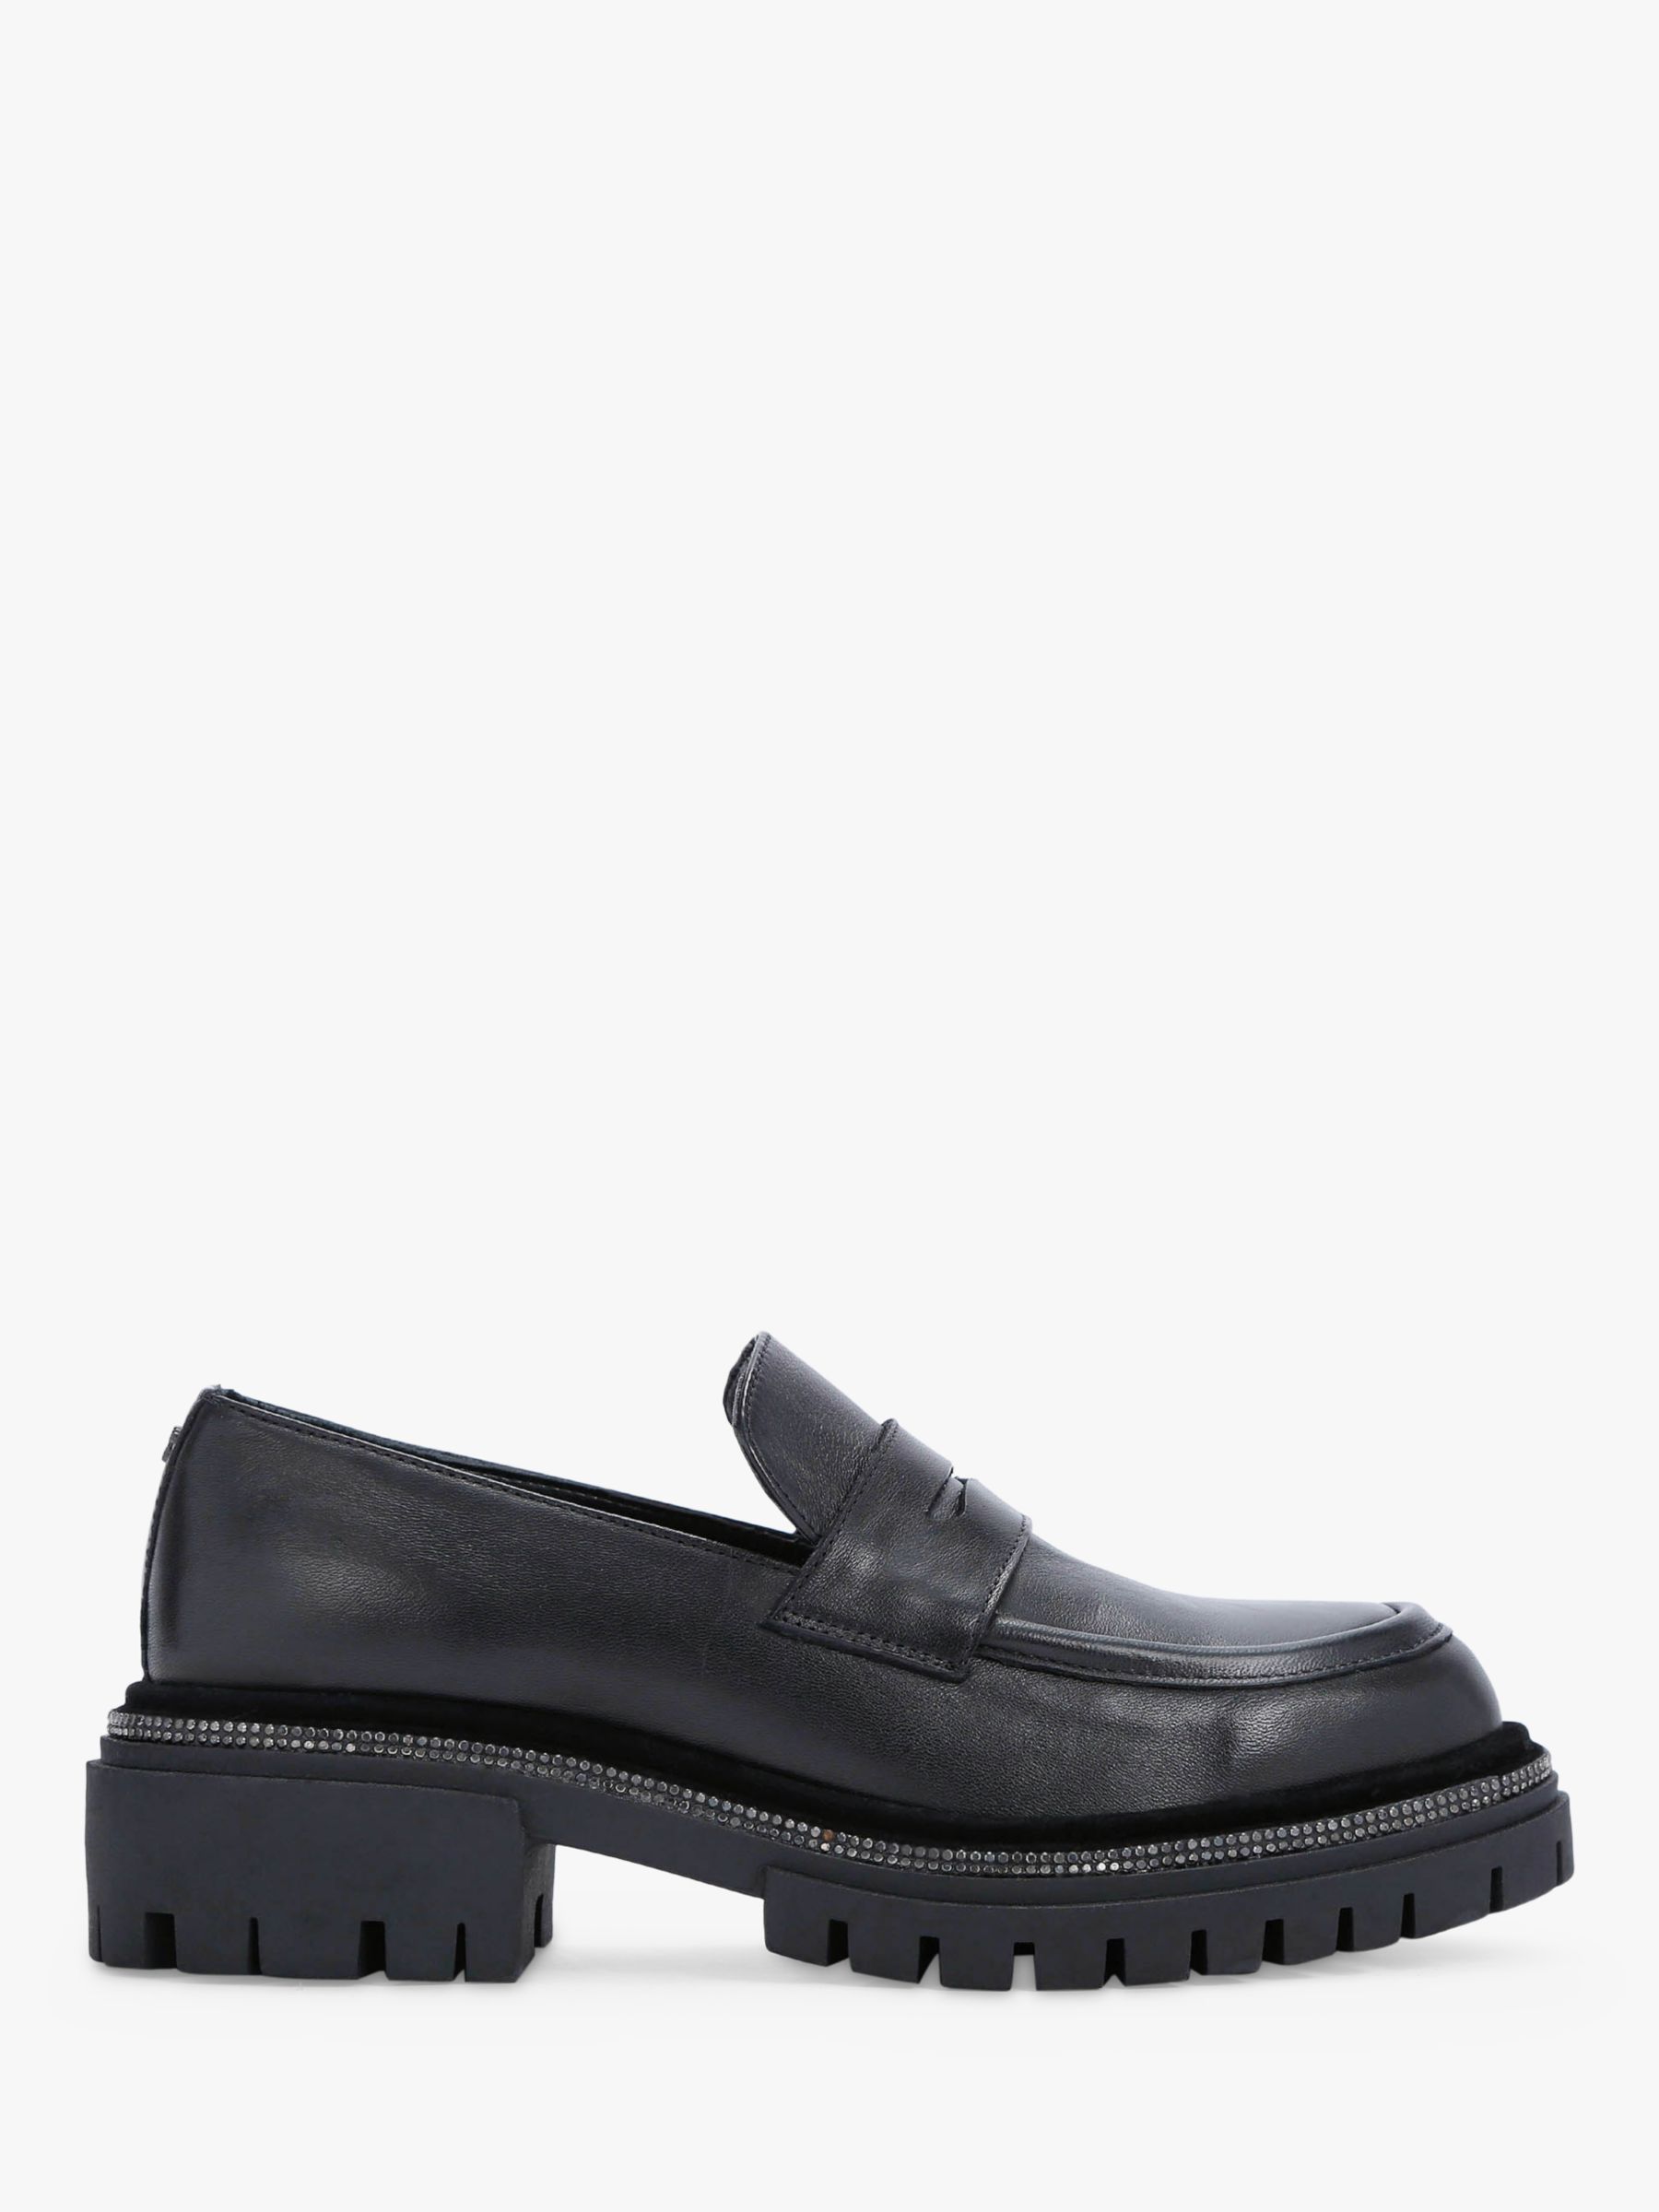 Carvela Dazzle Leather Loafers, Black, 3